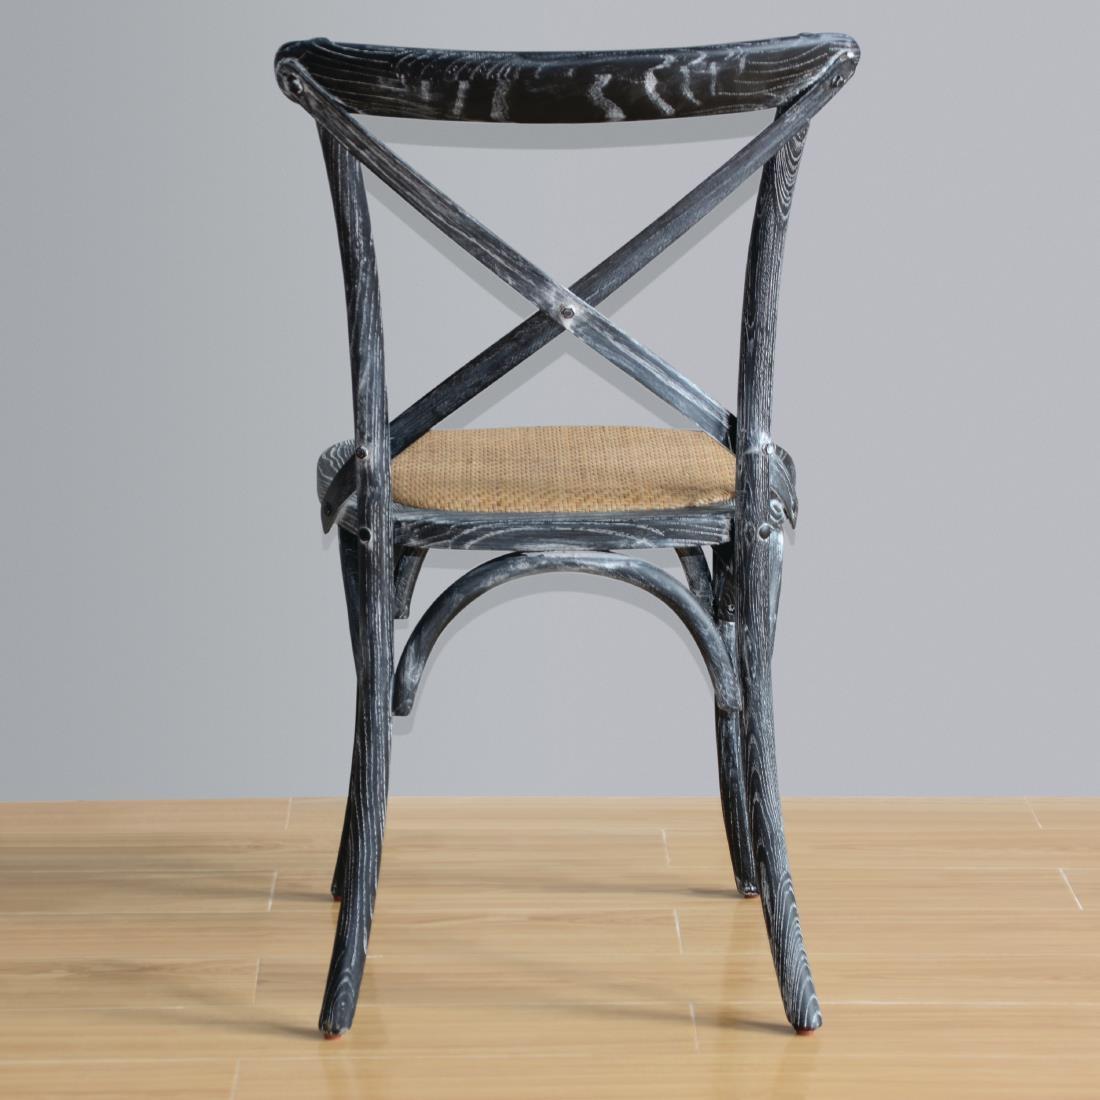 GG654 - Bolero Wooden Dining Chair with Cross Backrest Black Wash Finish (Box 2) - GG654  - 10